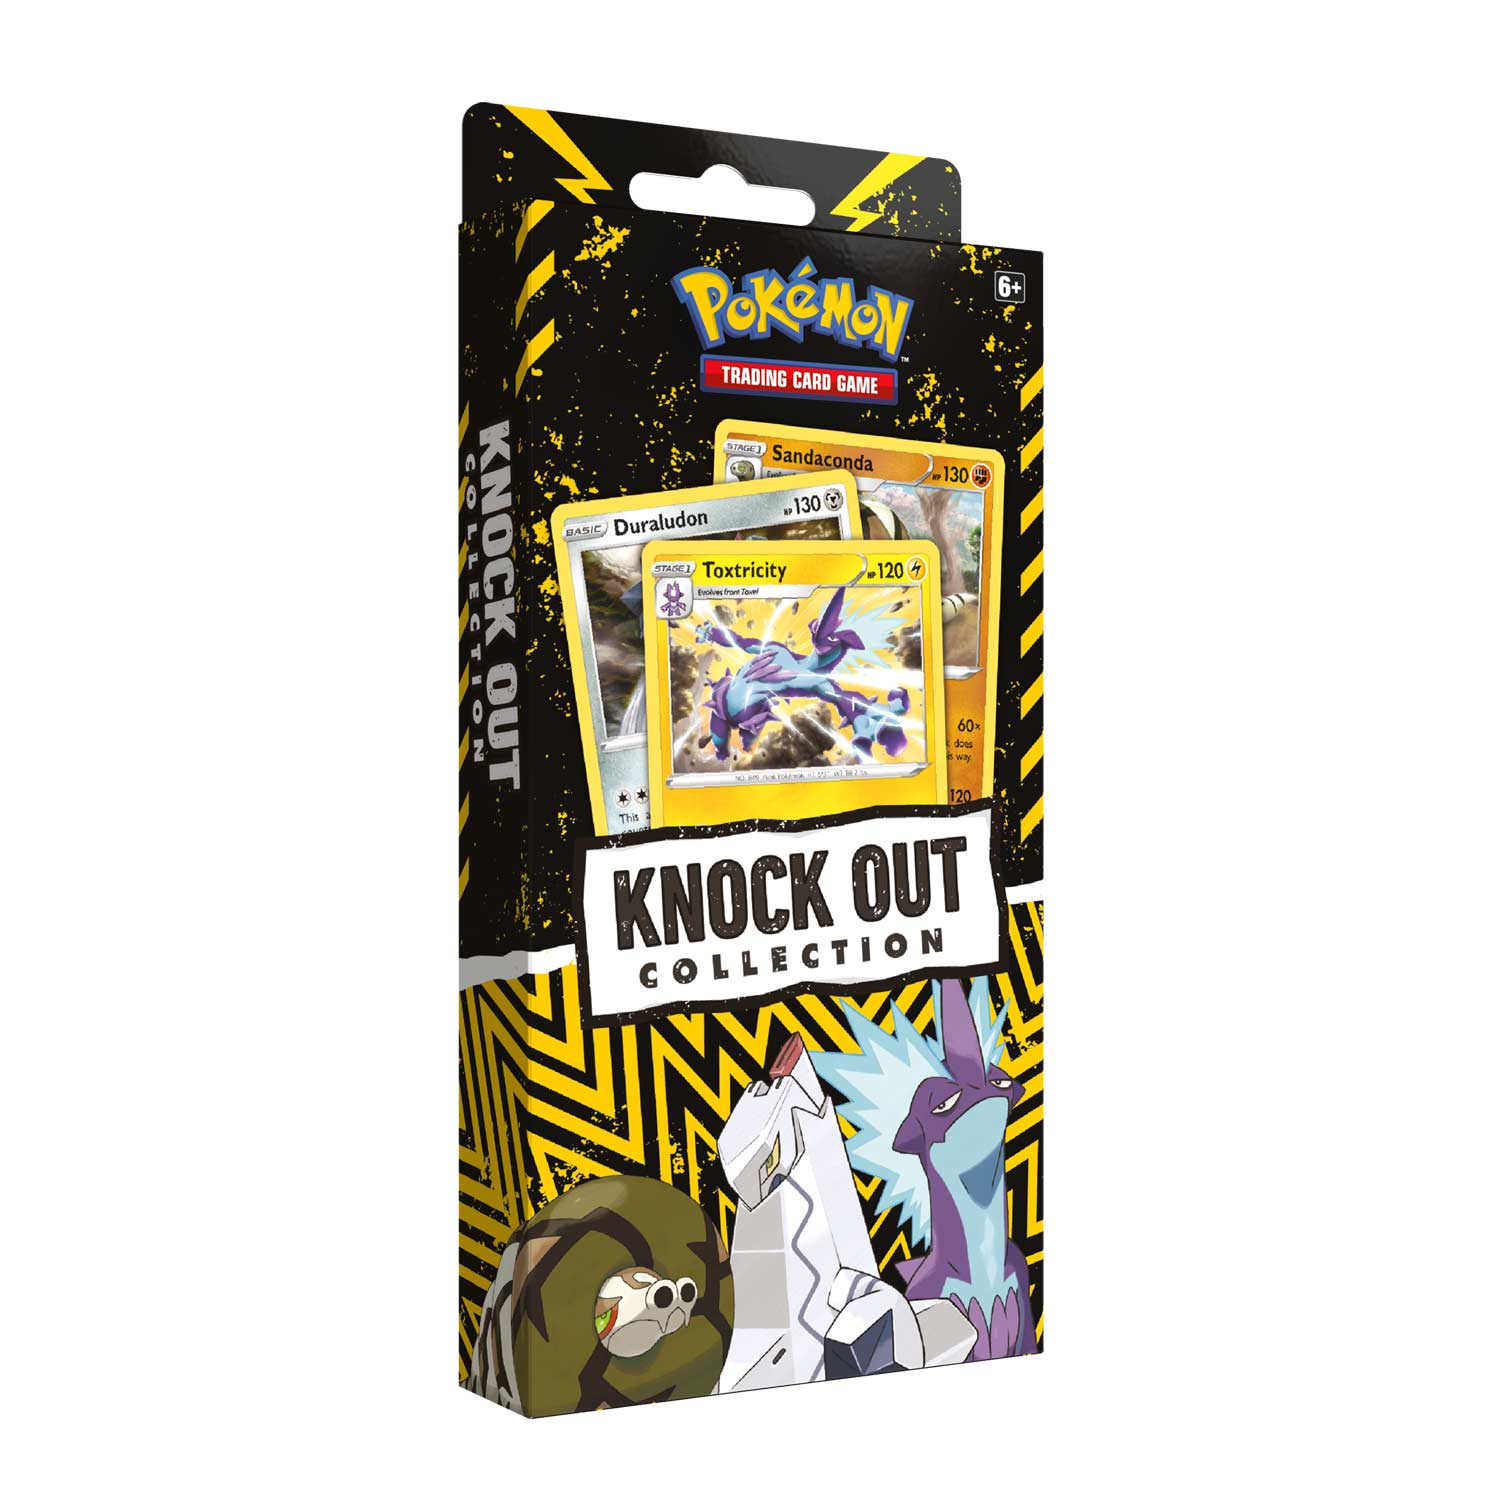 Pokémon - Knock Out Collection (Toxtricity, Duraludon, Sandaconda) - englisch